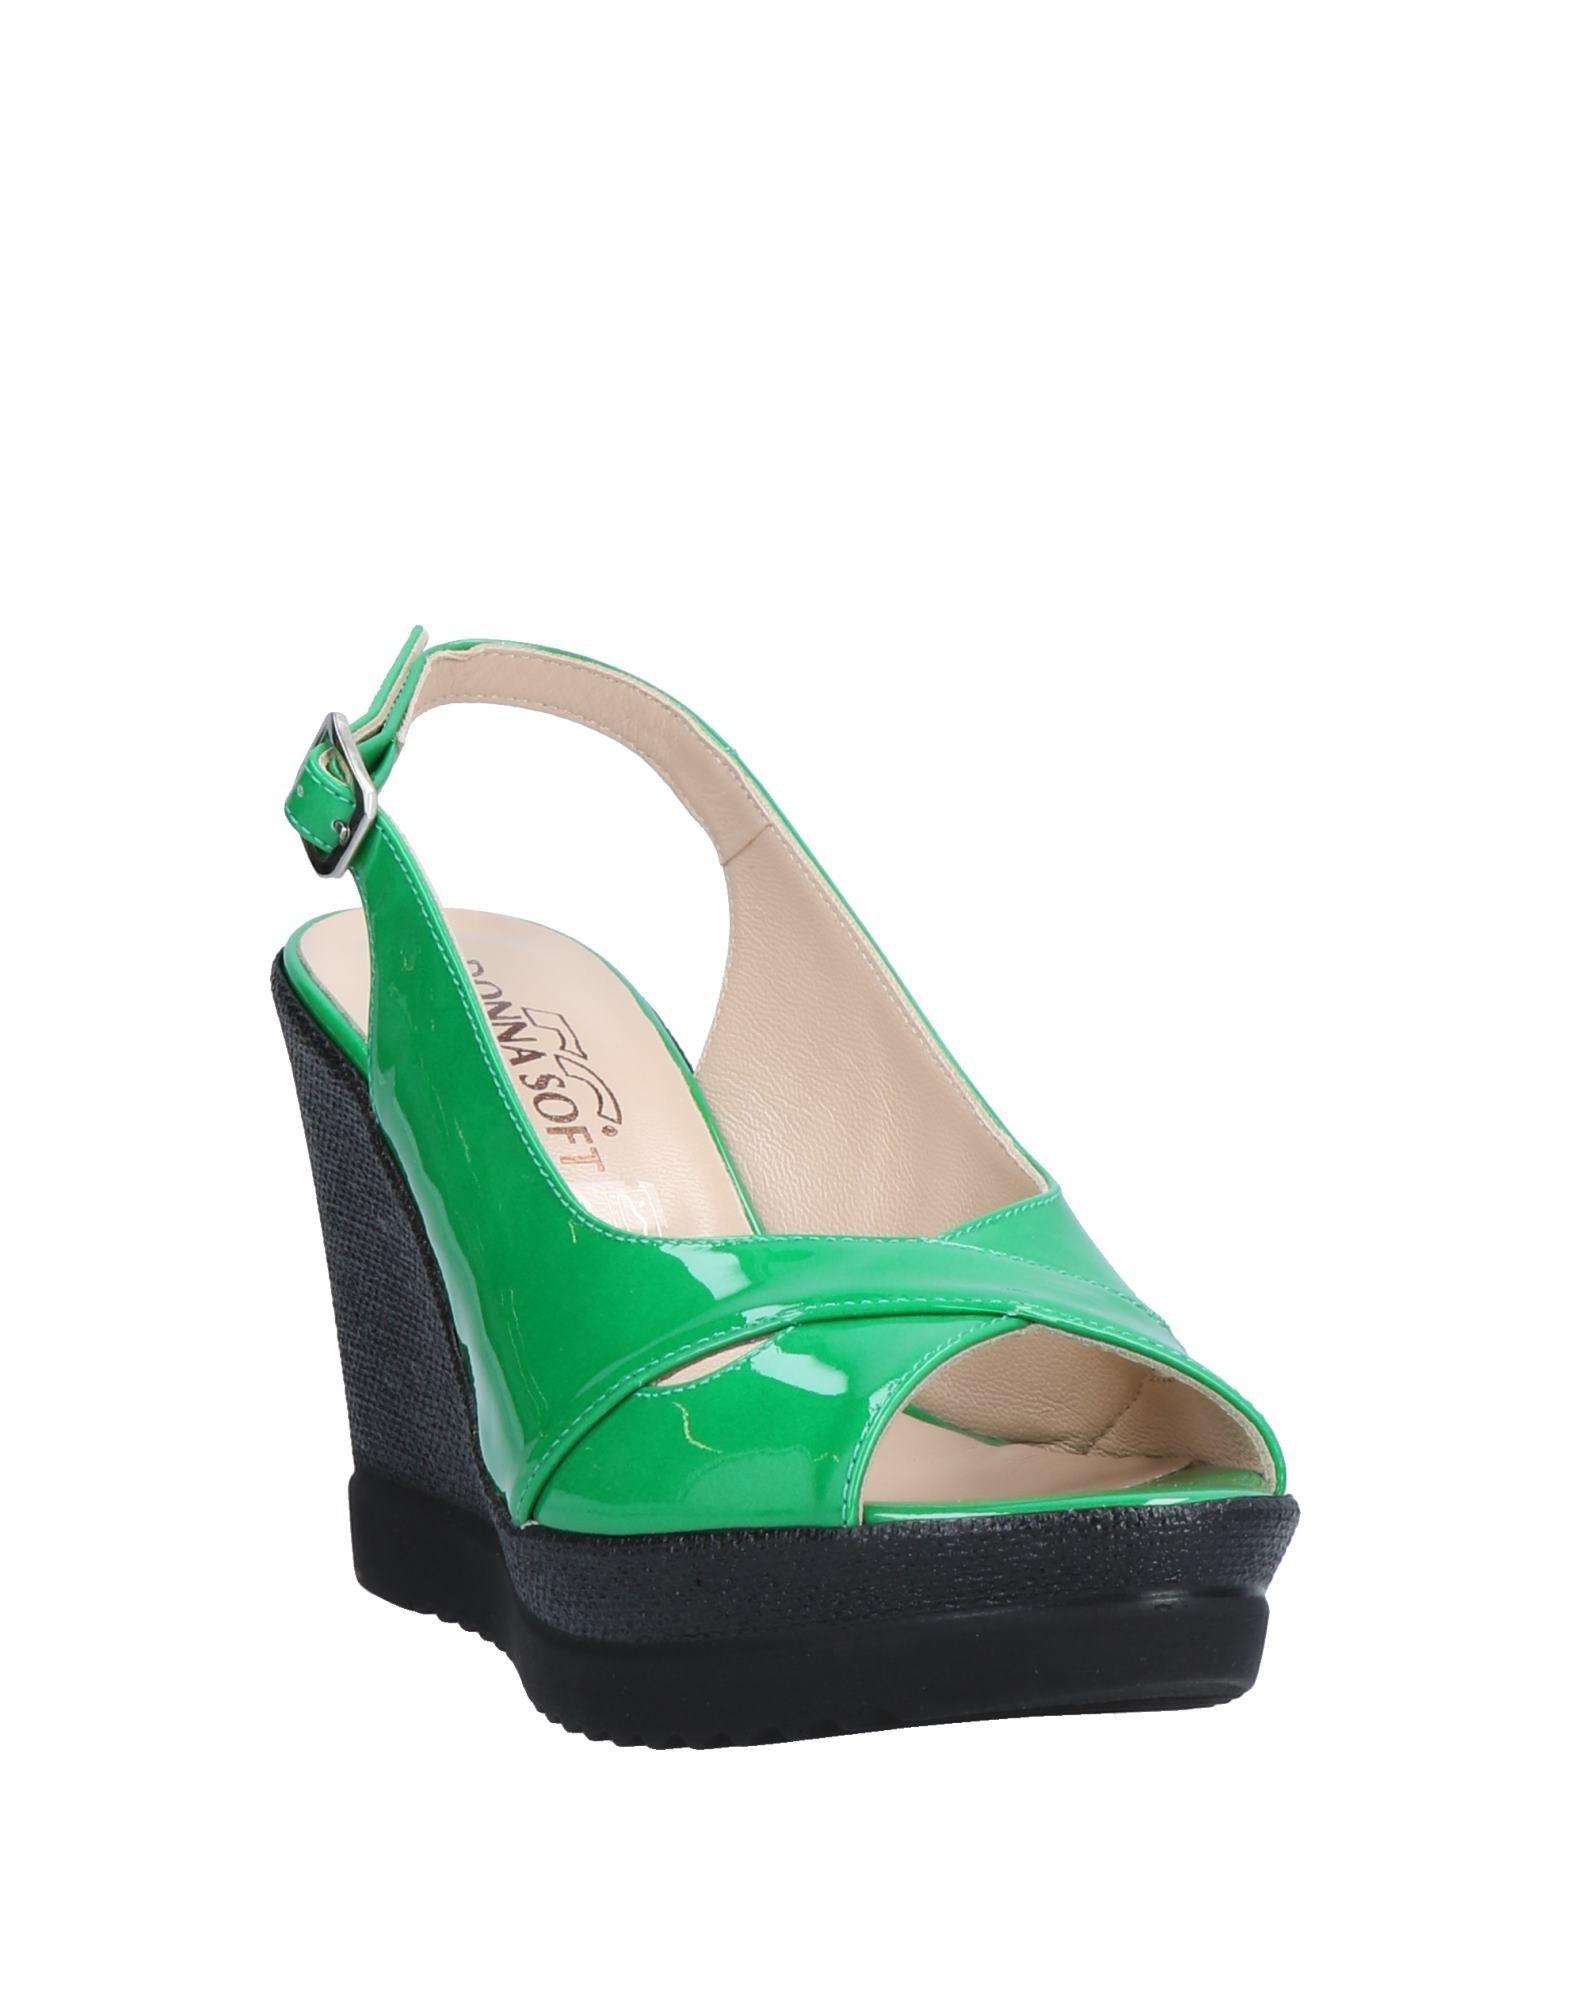 emerald green wedge sandals,therugbycatalog.com